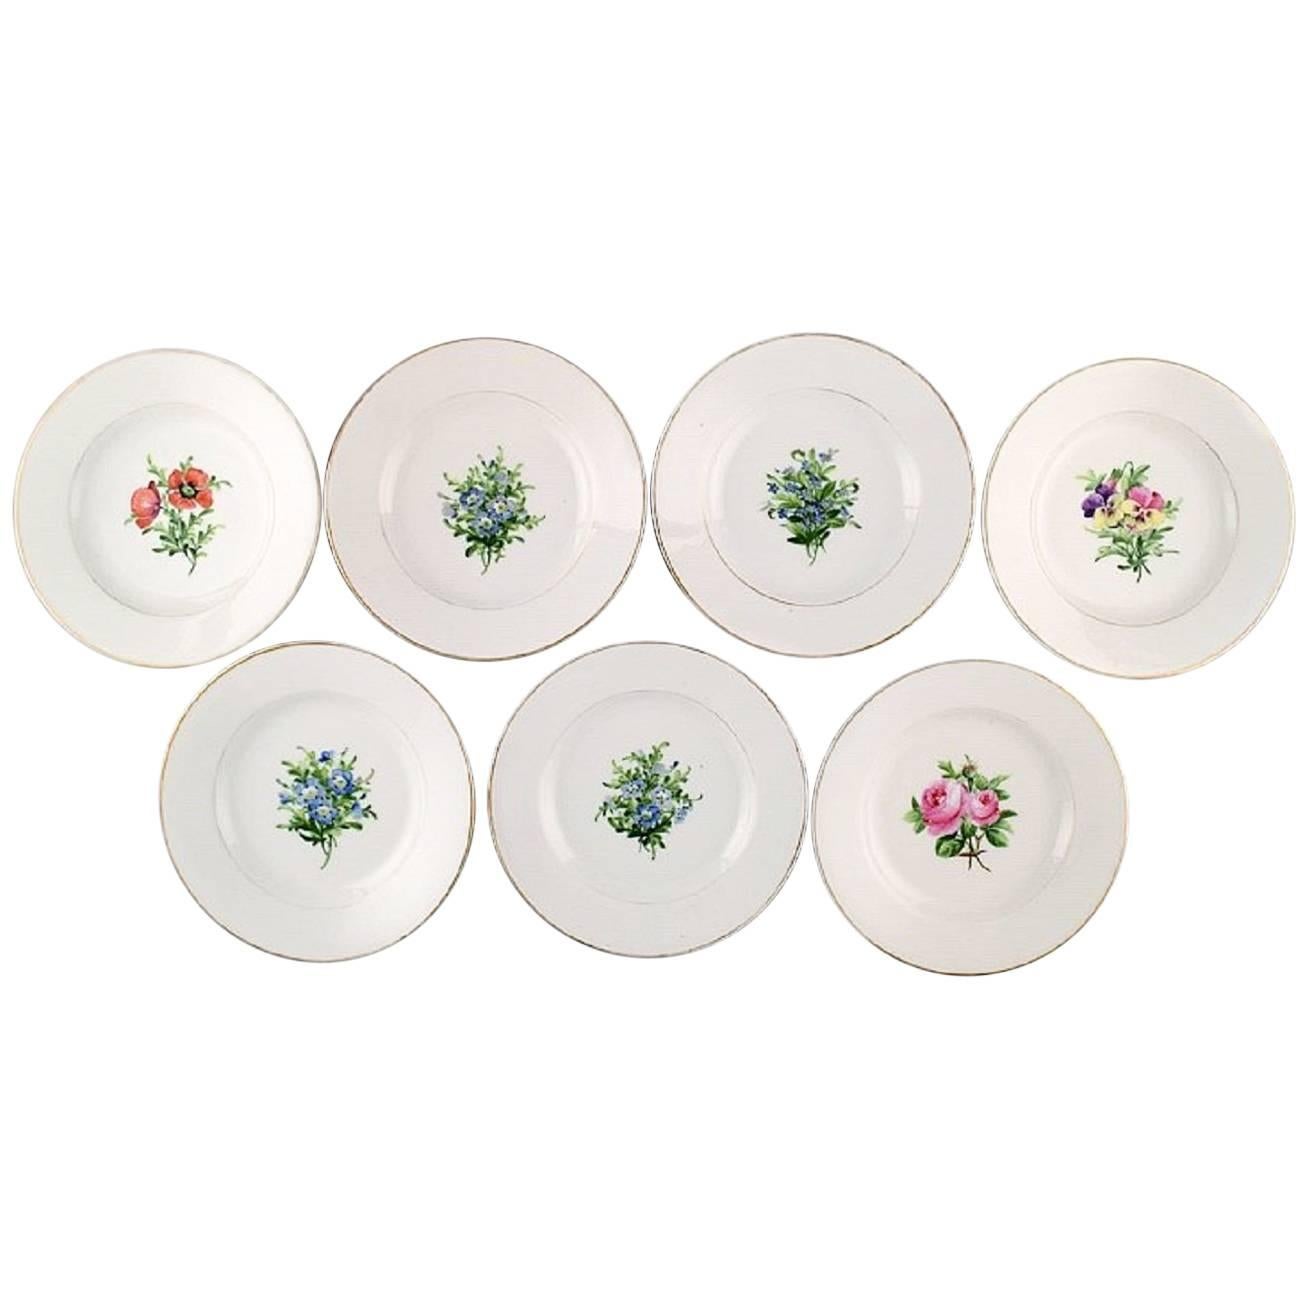 Seven Antique Royal Copenhagen Plates in Flora Danica Style